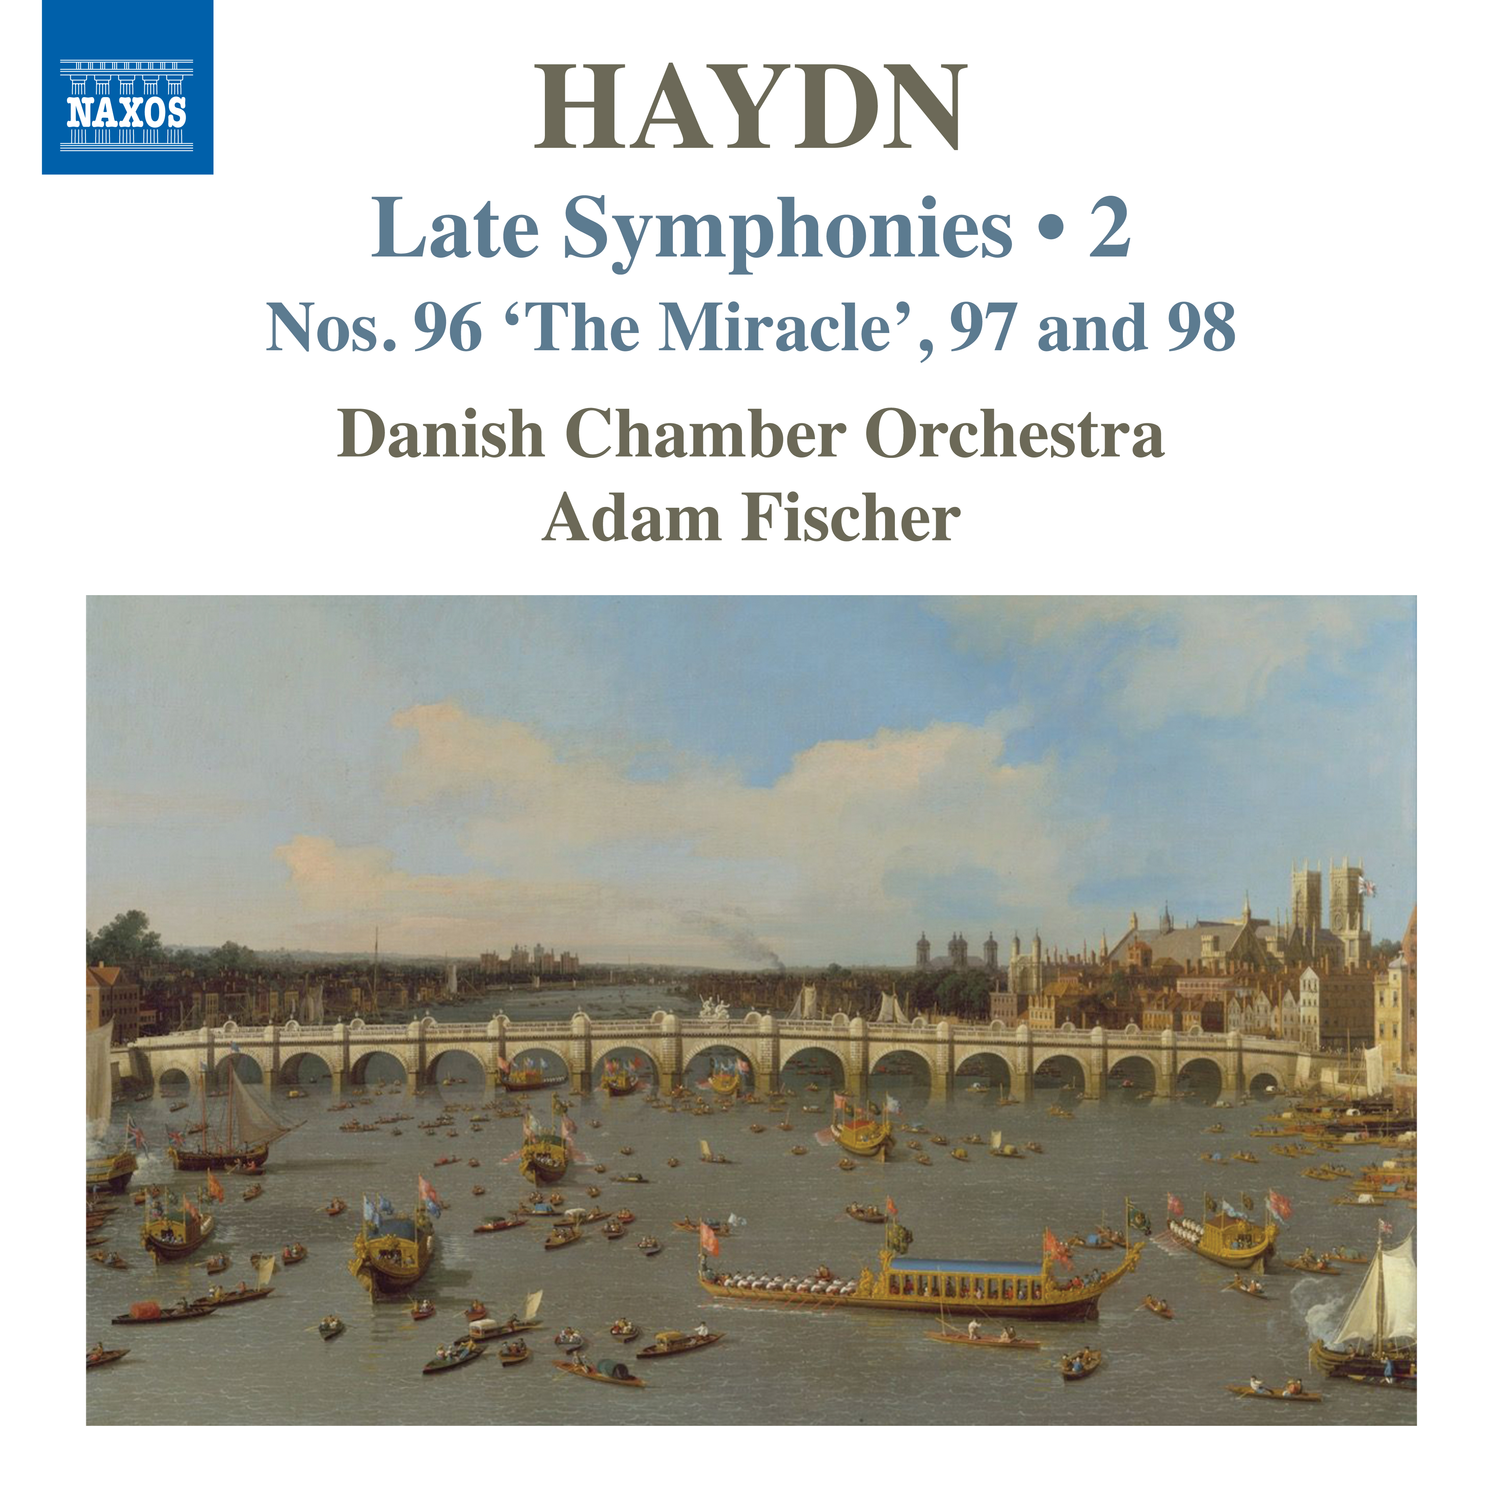 035 Haydn late symphonies vol 2